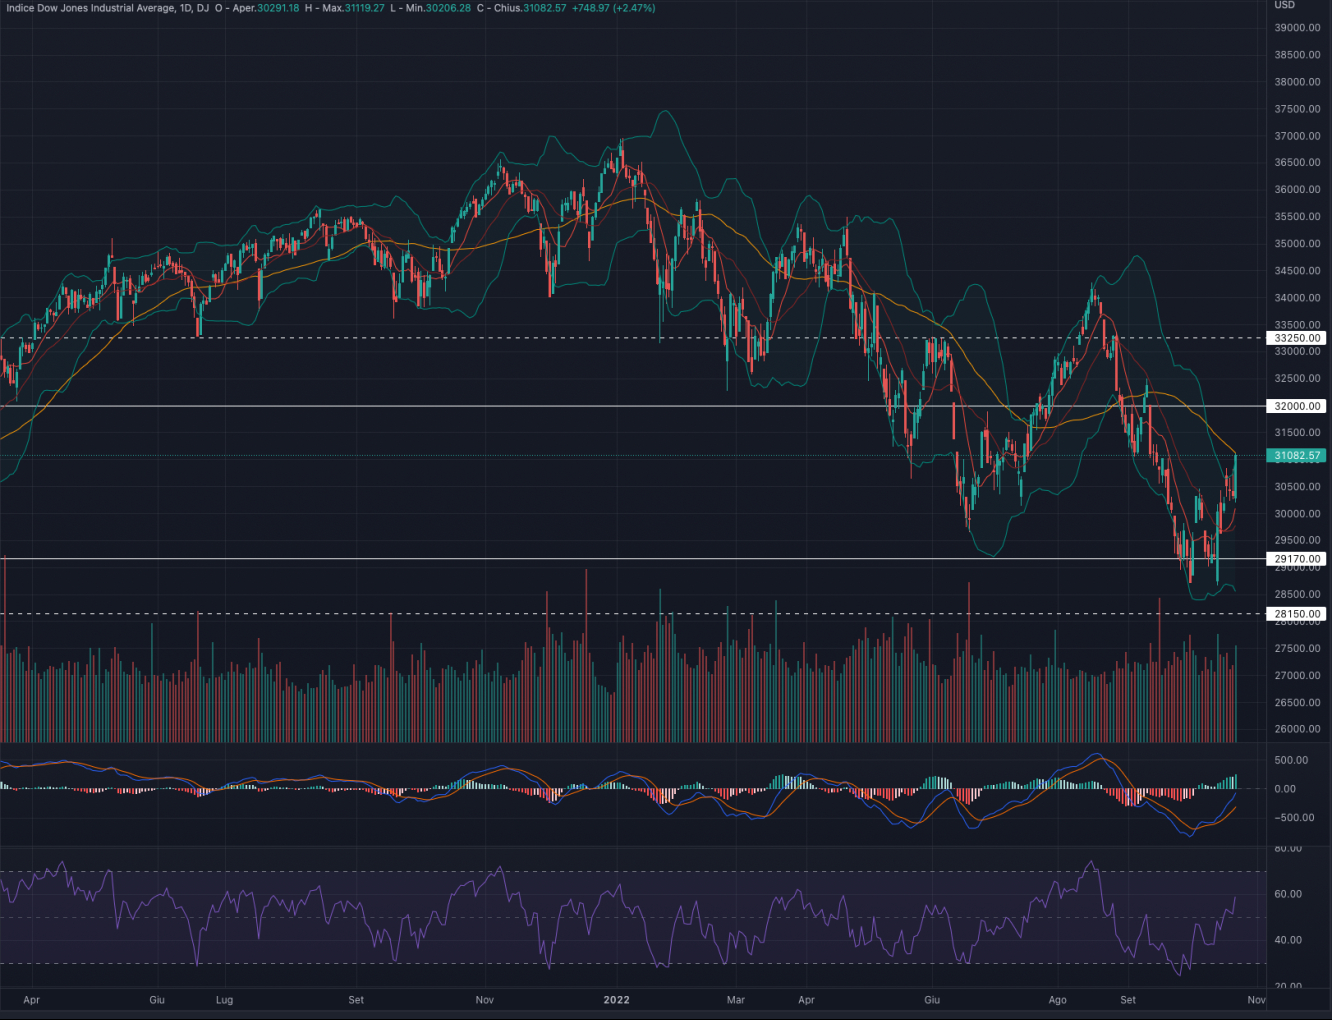 Daily chart: Dow Jones